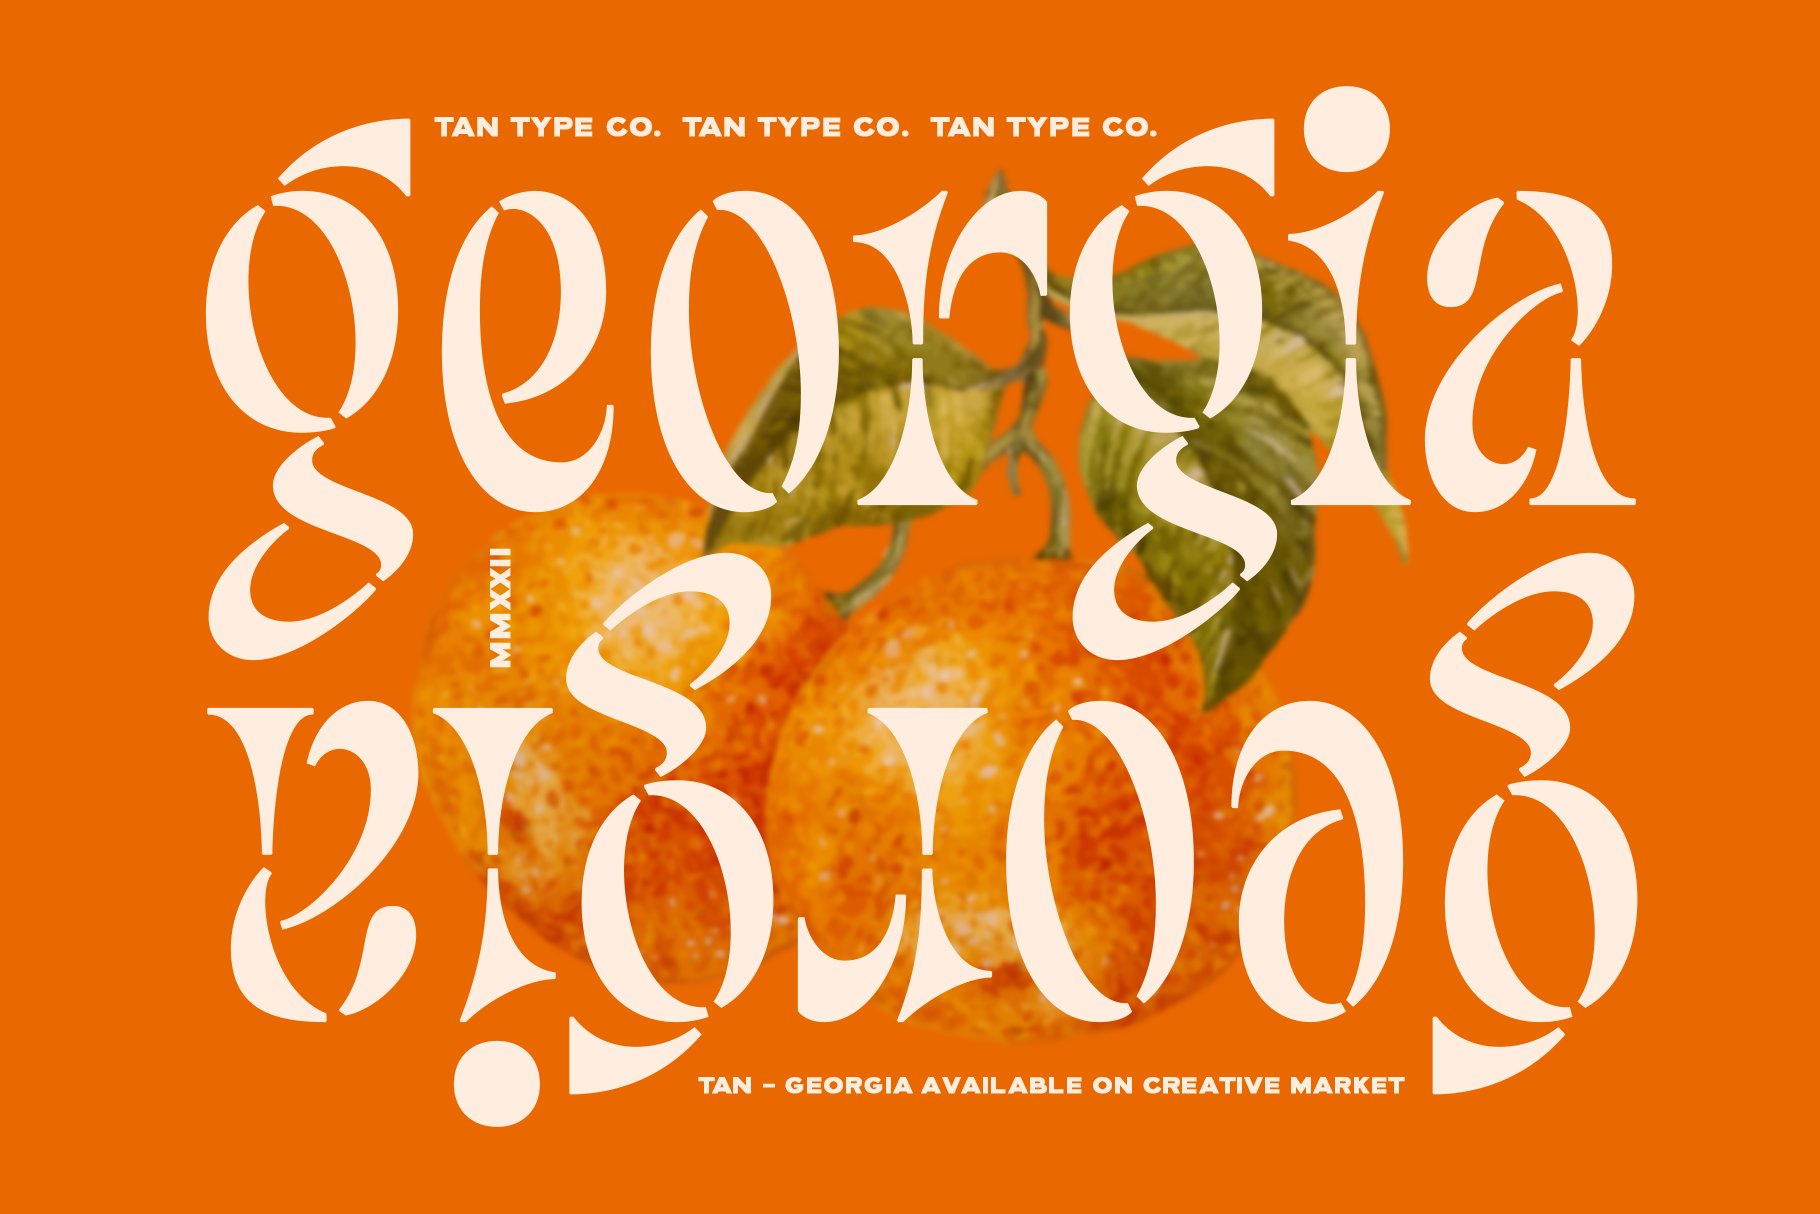 TAN - GEORGIA cover image.